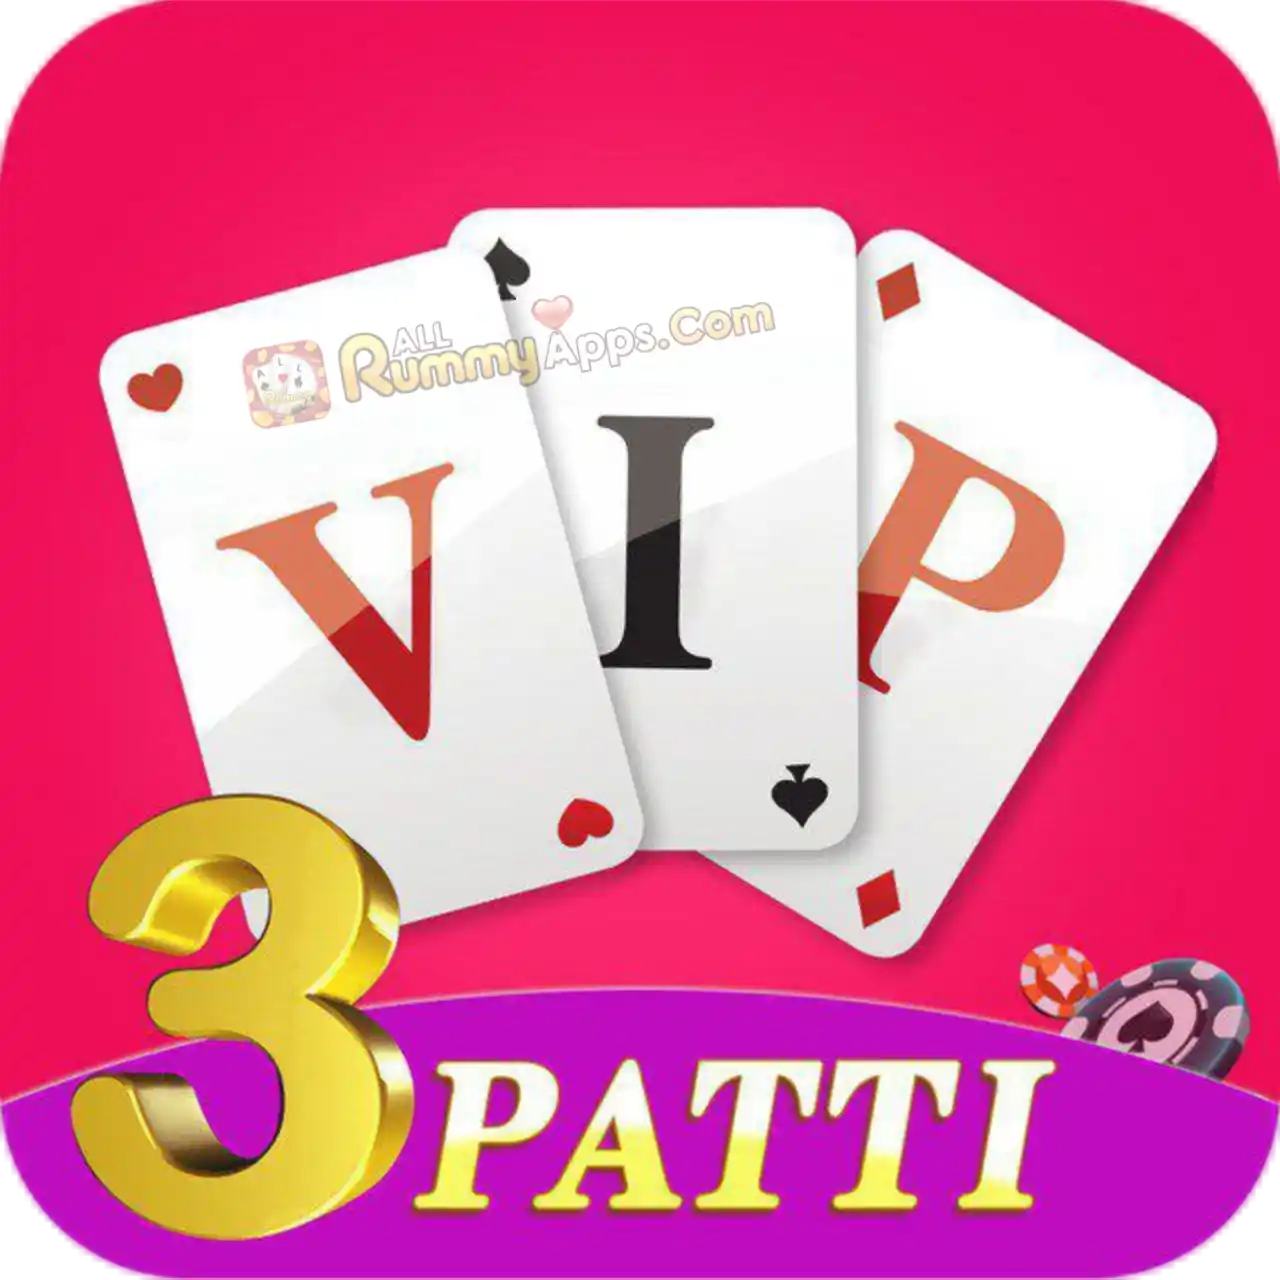 VIP 3 Patti APK Logo